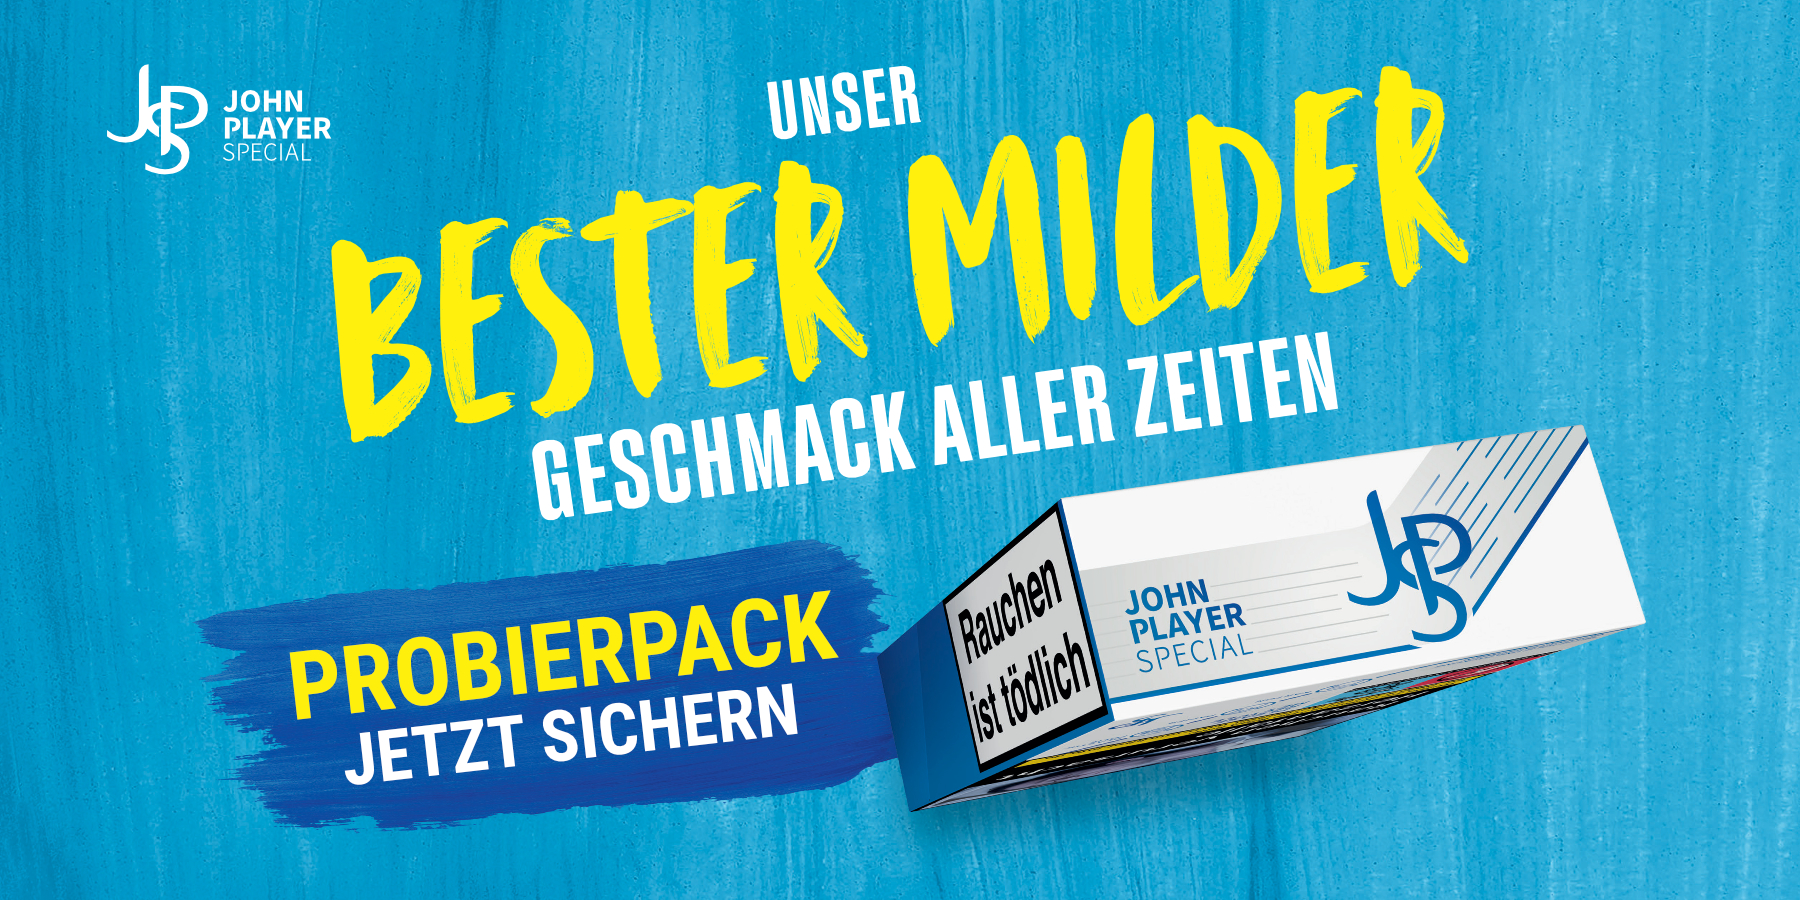 JPS-Bester-milder-Probierpack